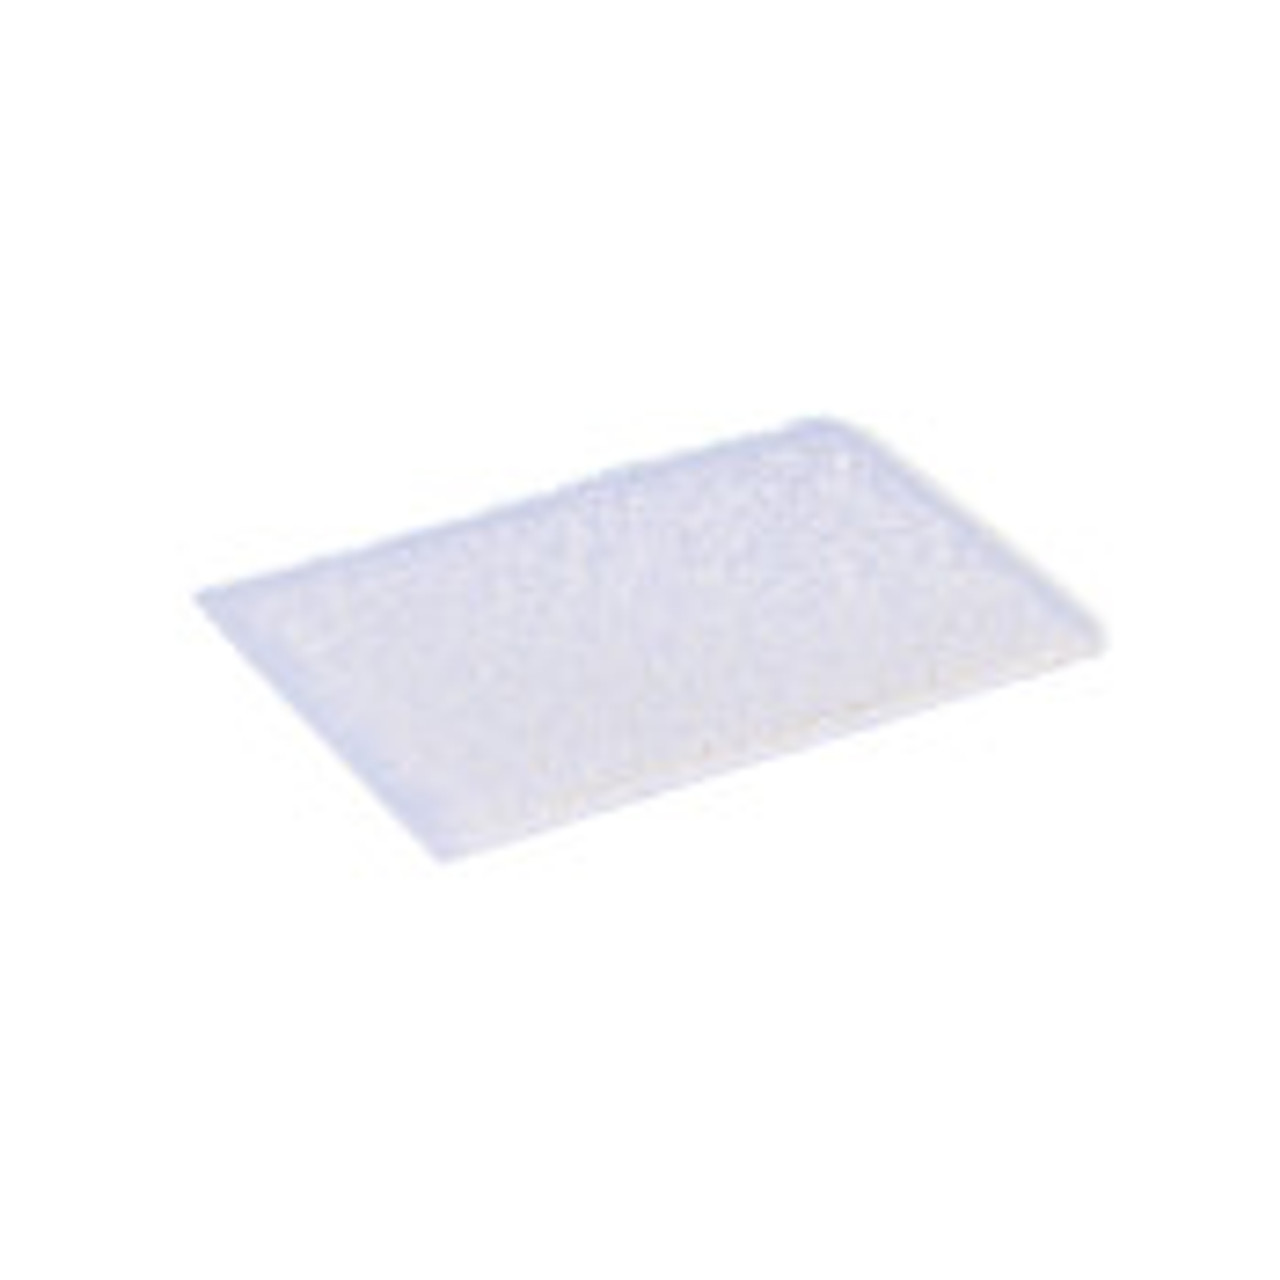 Velcro brand Adhesive Glue 1 oz (ORMD) - 075967900656